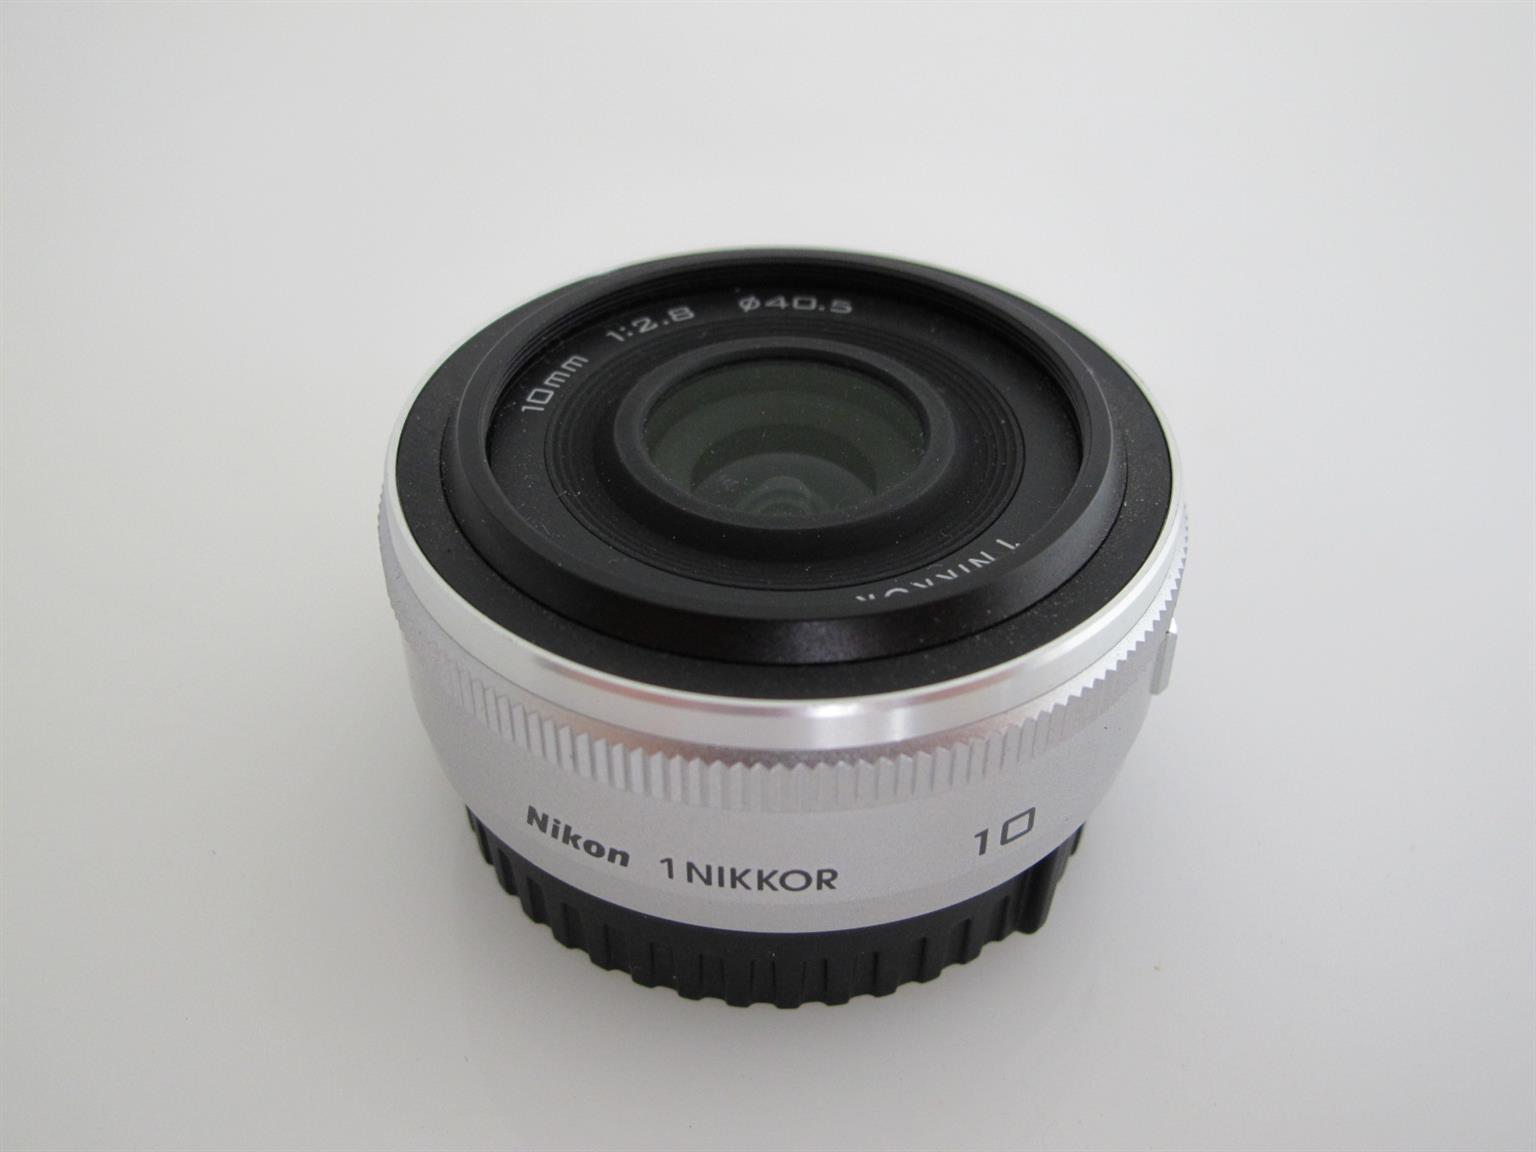 Nikon 1 Nikkor 10mm f2.8 lens for Nikon 1 Series Mirroless Digital cameras